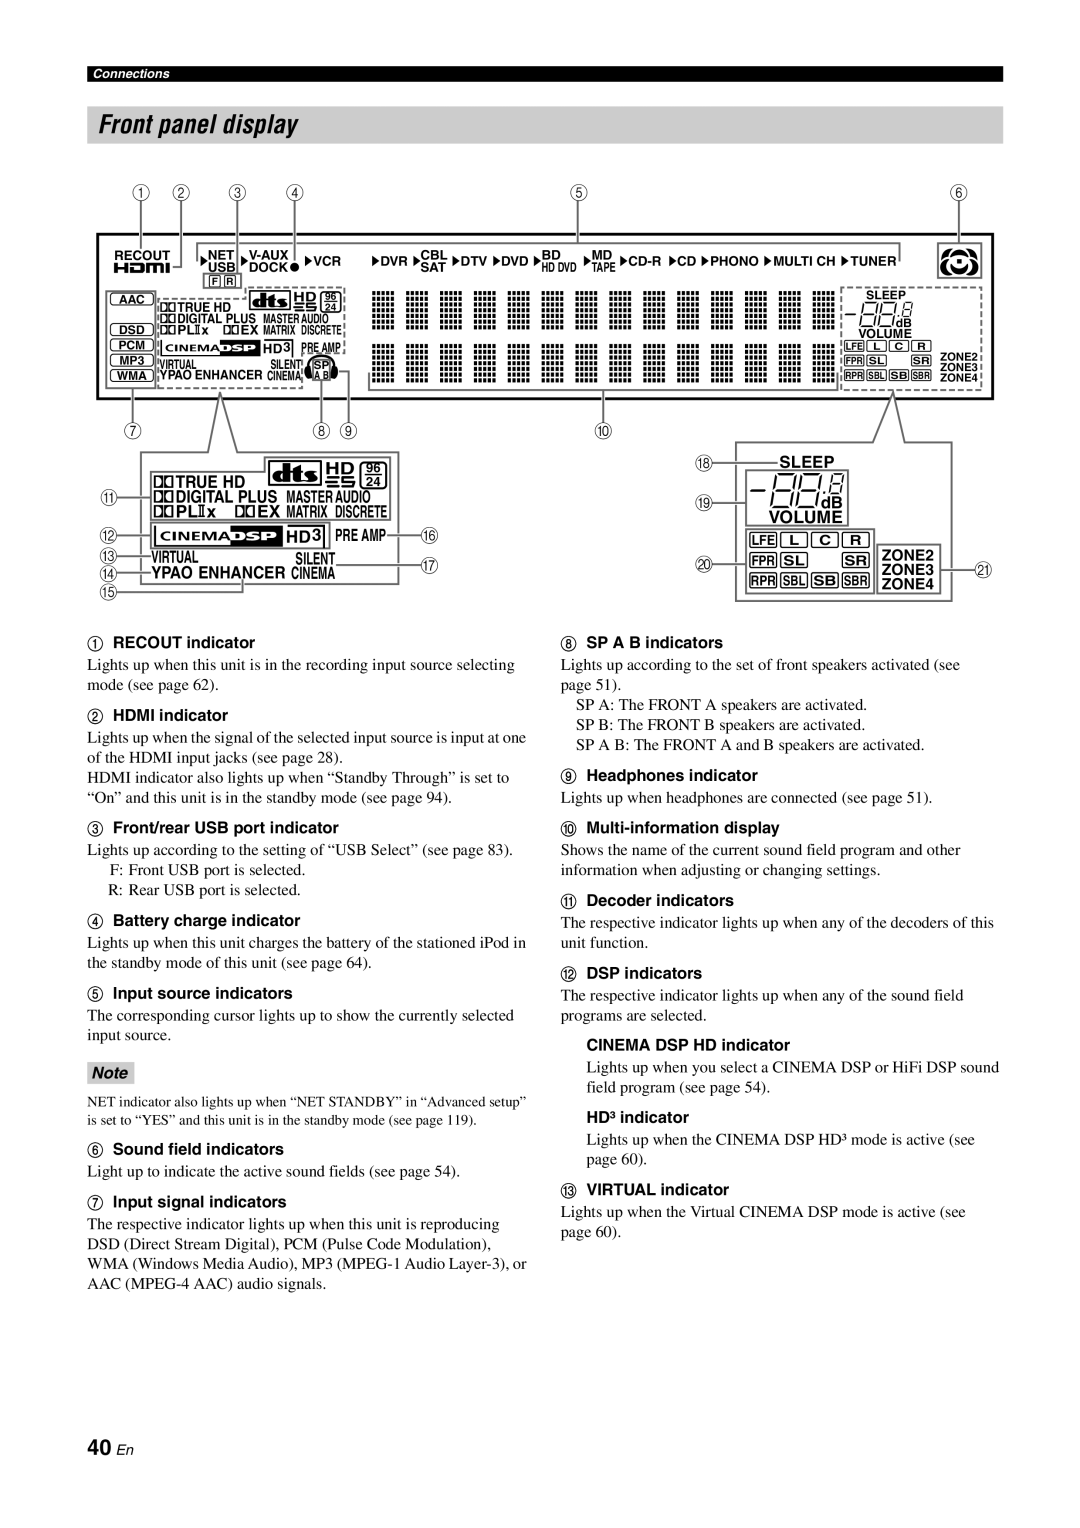 Yamaha DSP-Z11 owner manual Front panel display, 40 En, t HD, qTRUE HD, Pre Amp, Silent 